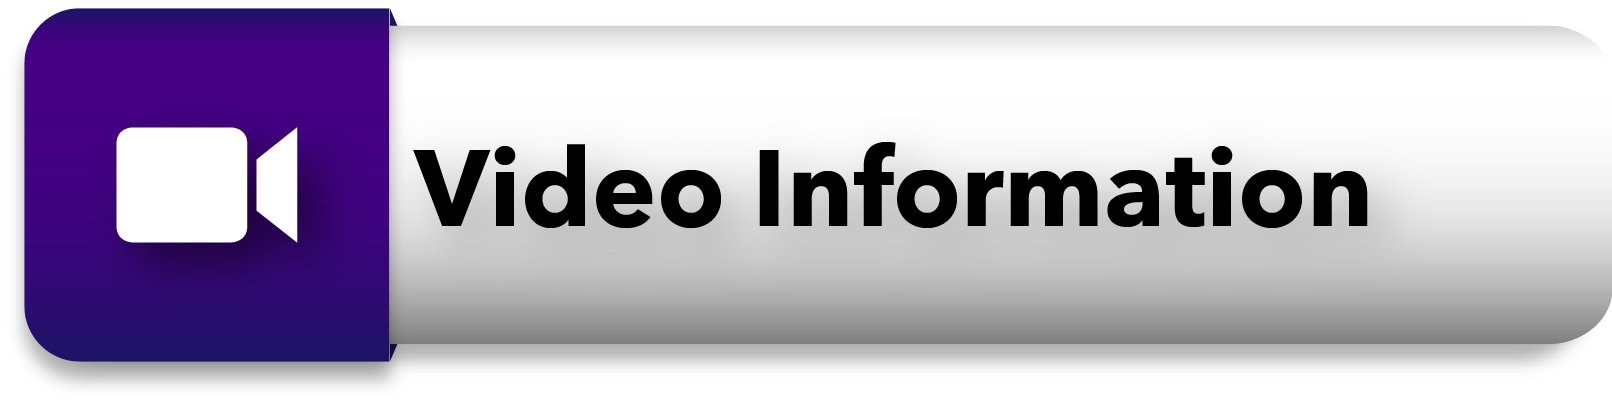 Video Information